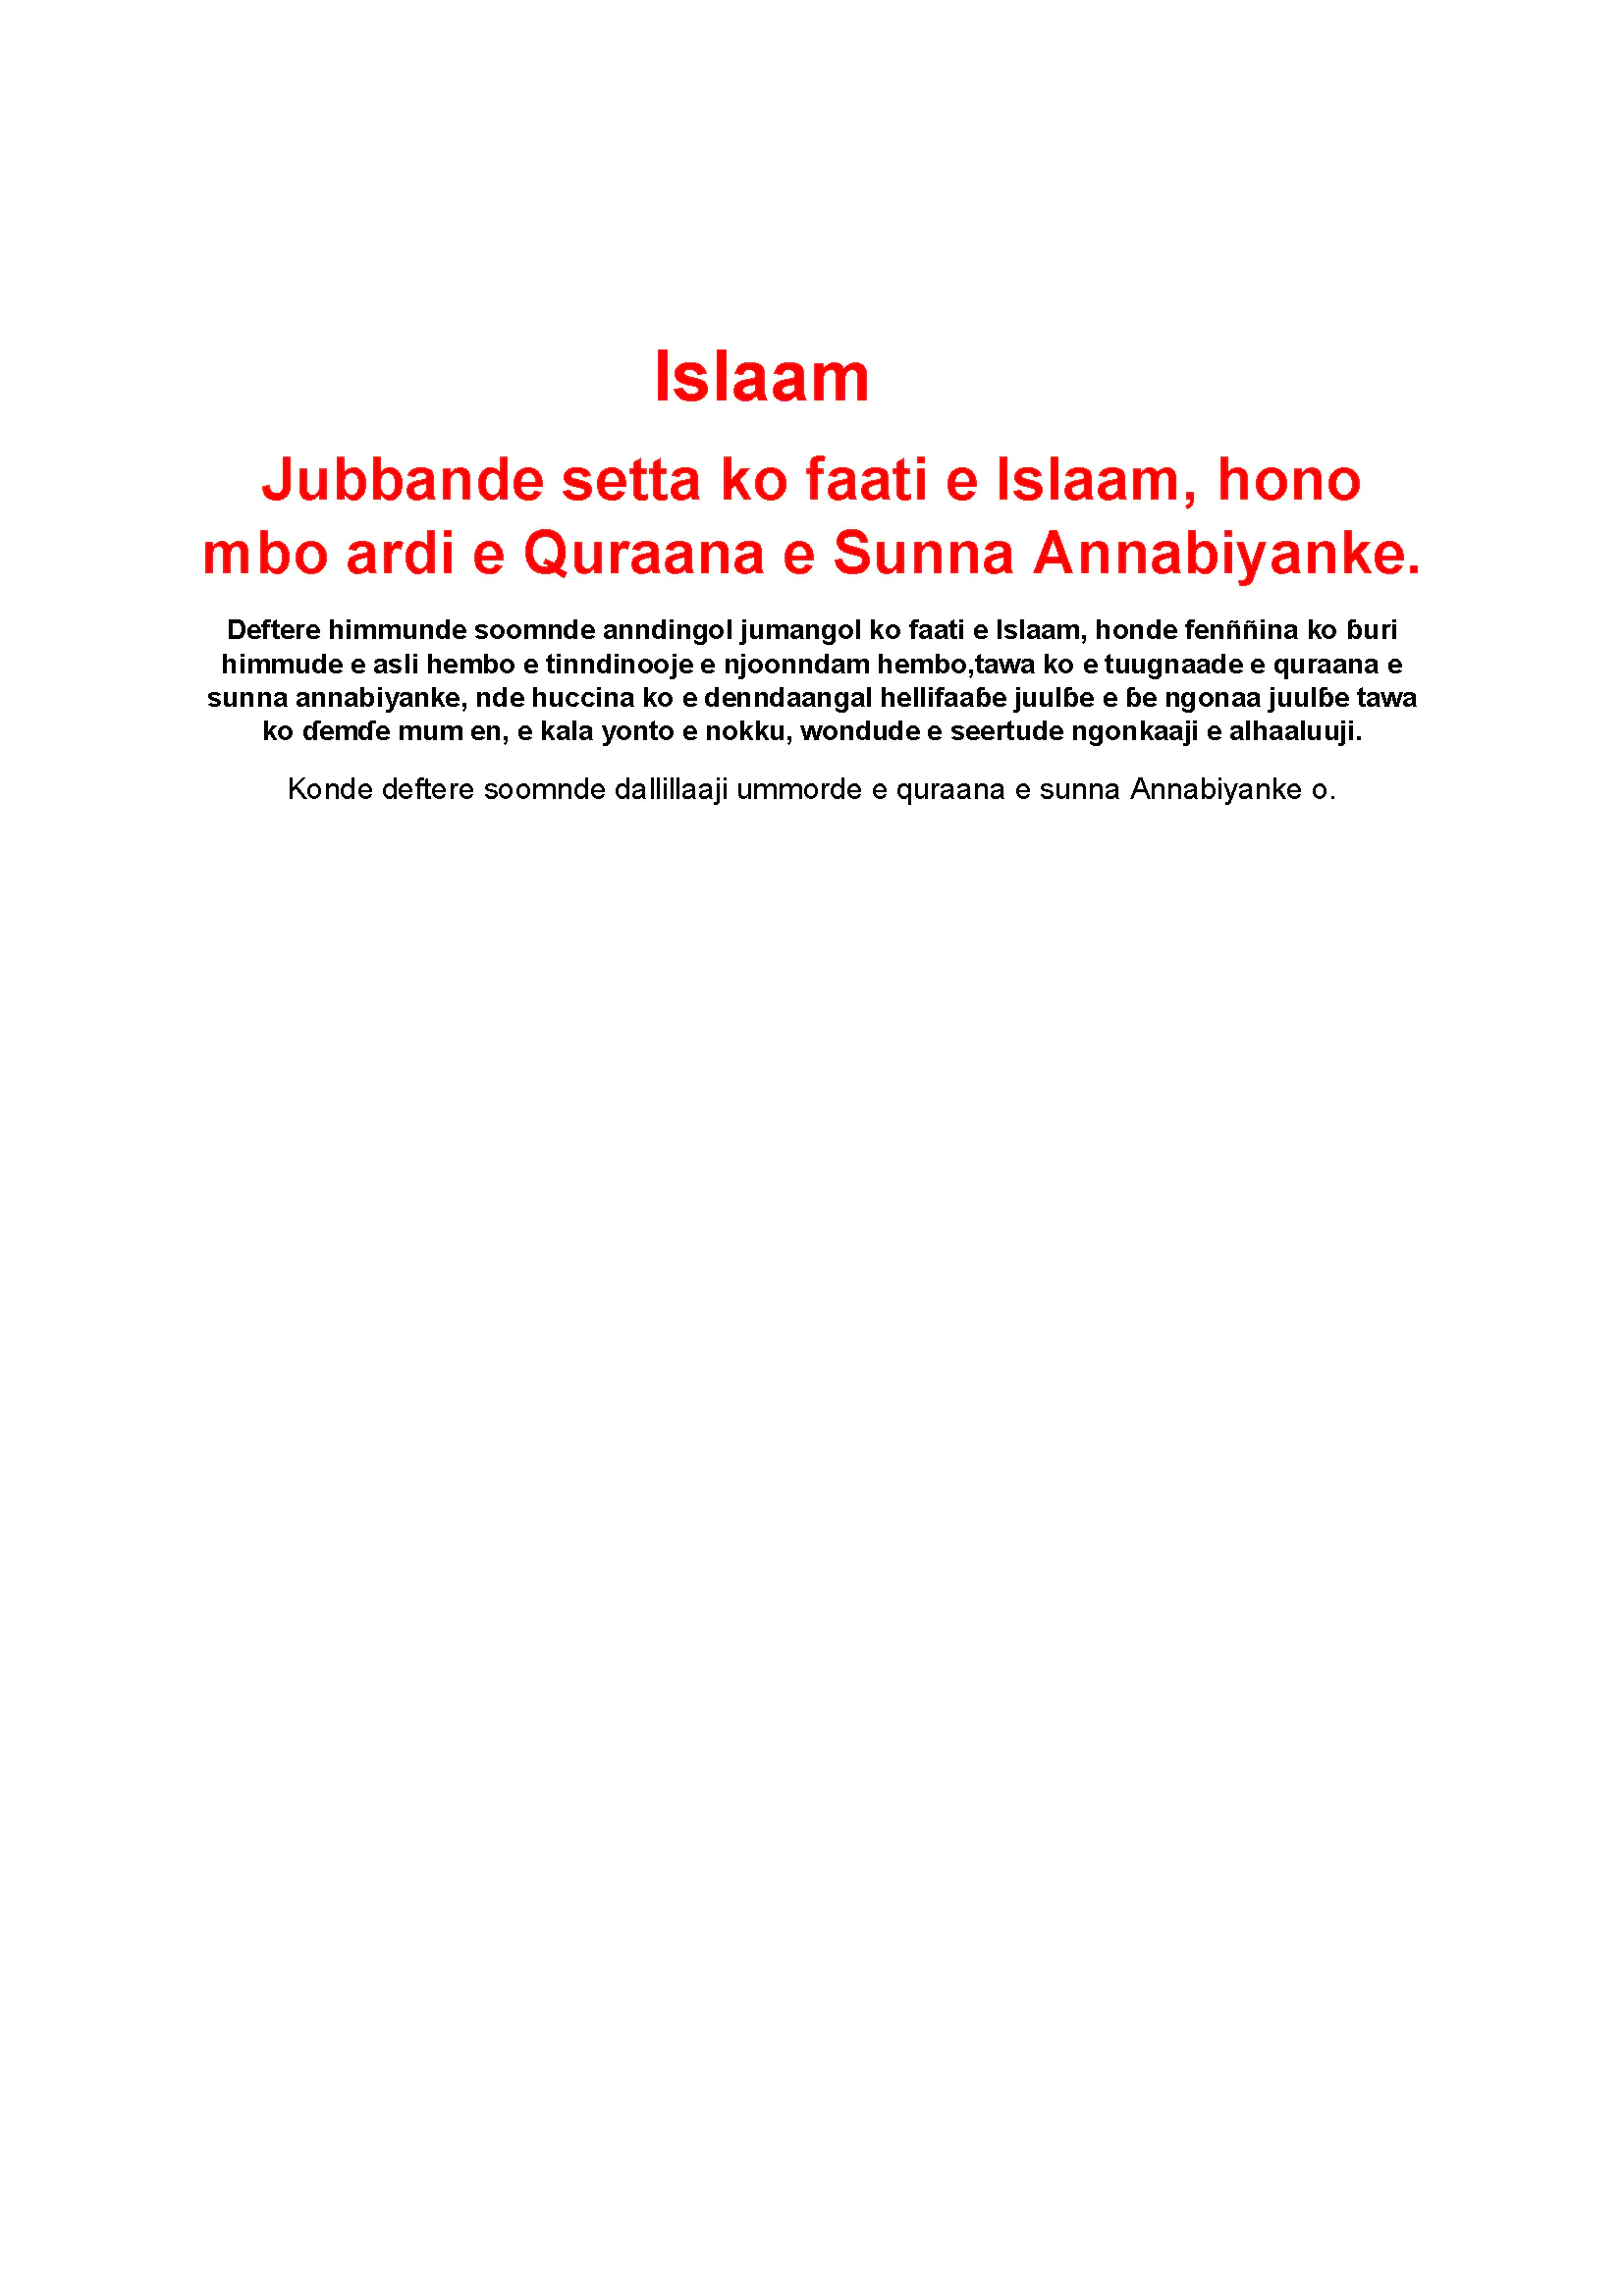 Islaam - Jubbande setta ko faati e Islaam, hono mbo ardi e Quraana e Sunna Annabiyanke